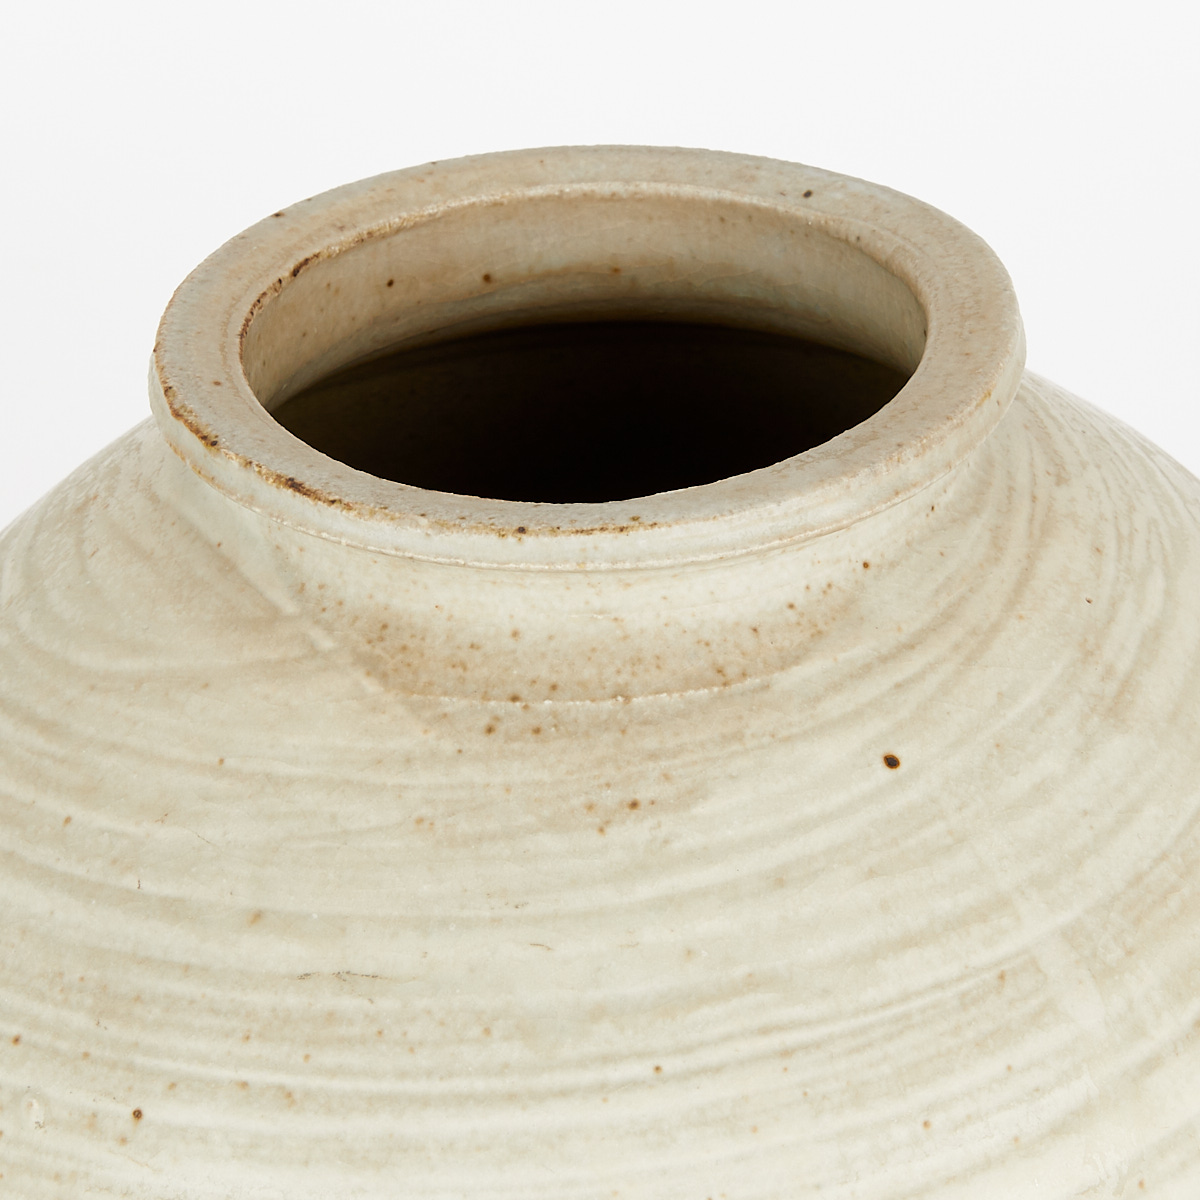 2 Studio Ceramic Vessels - Wayne Branum - Image 10 of 10